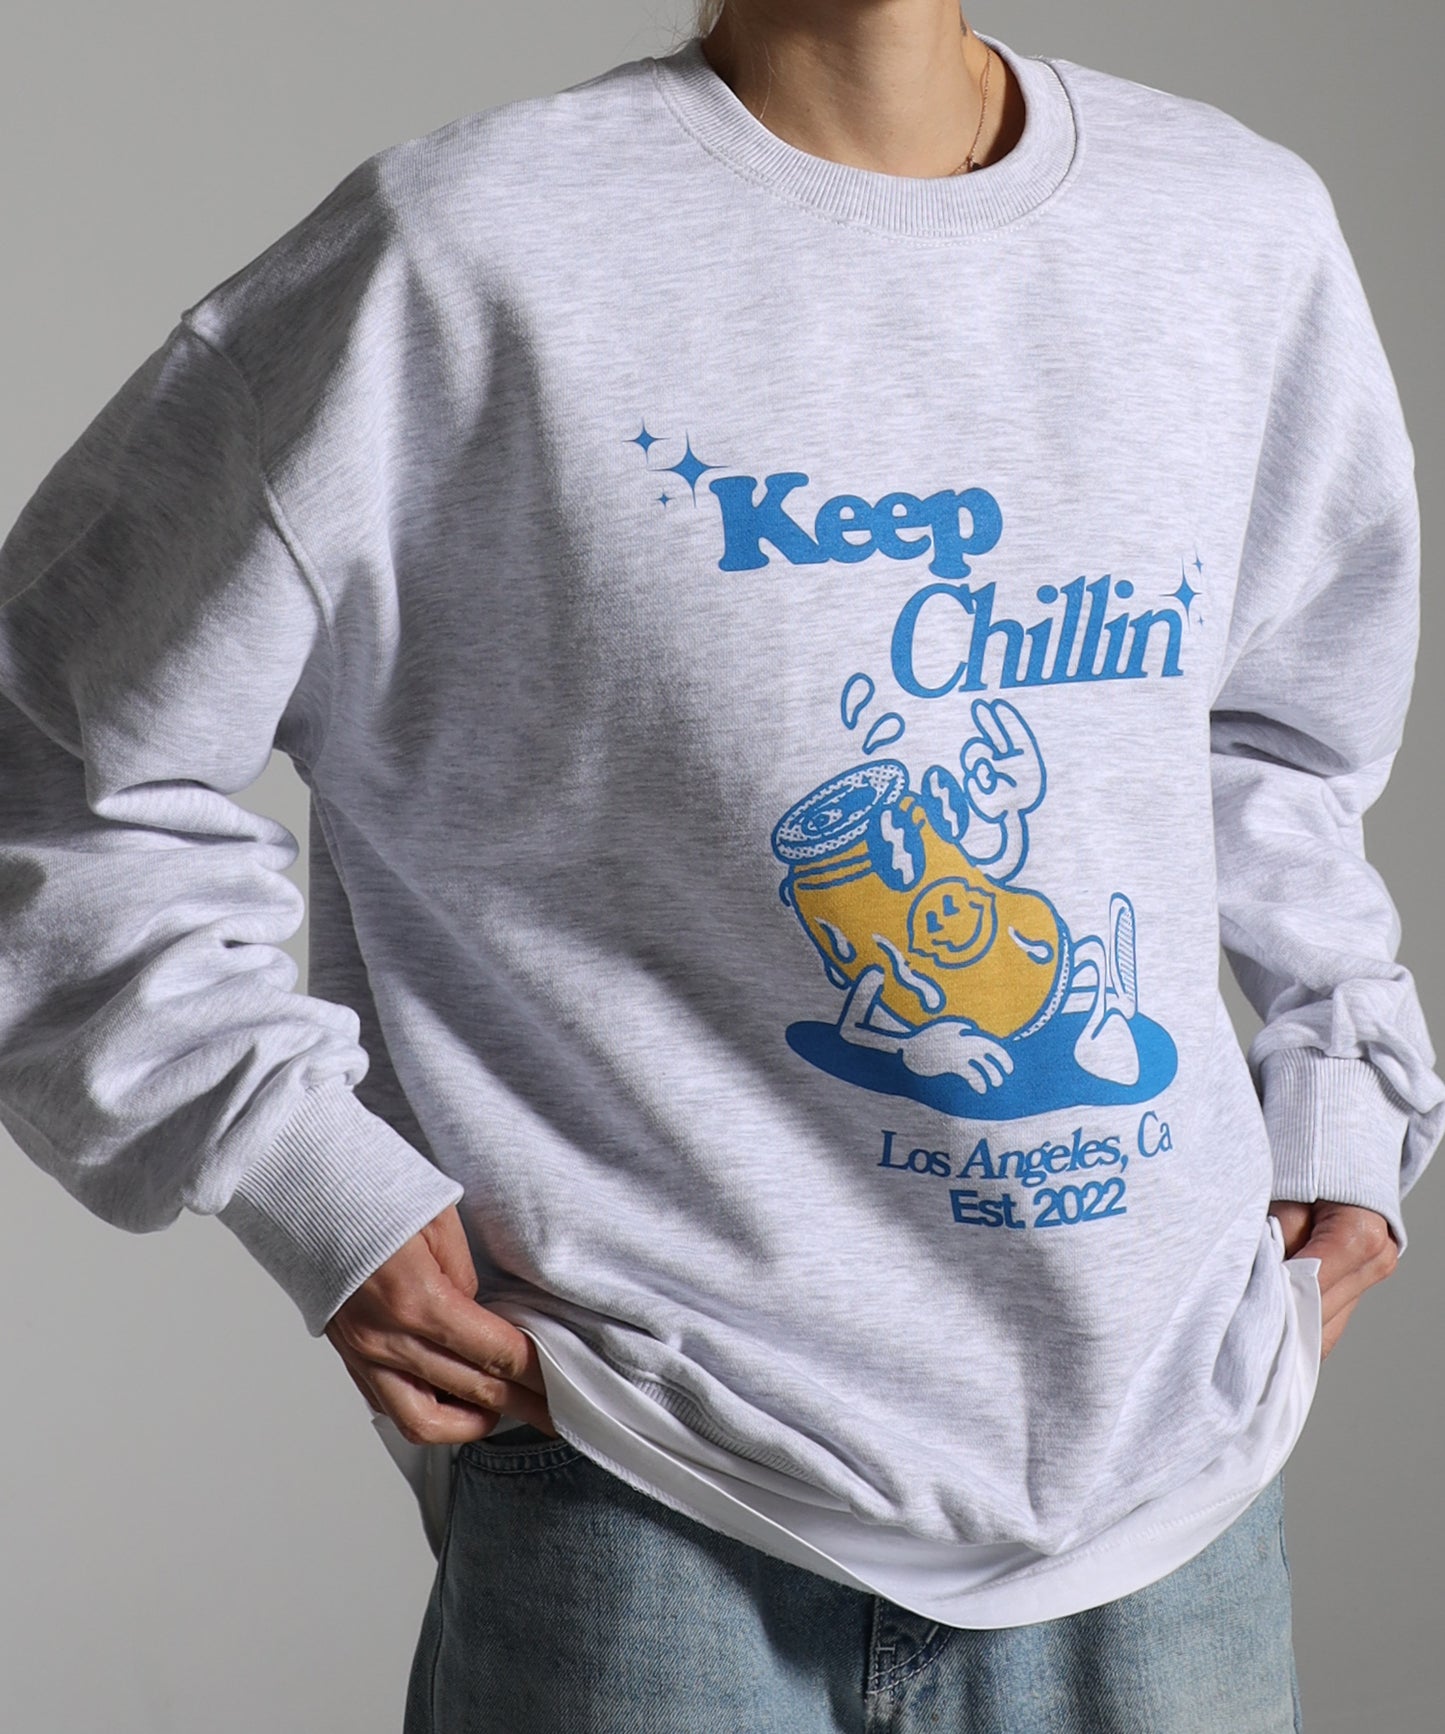 Keep Chillin Sweatshirt Designed by JT